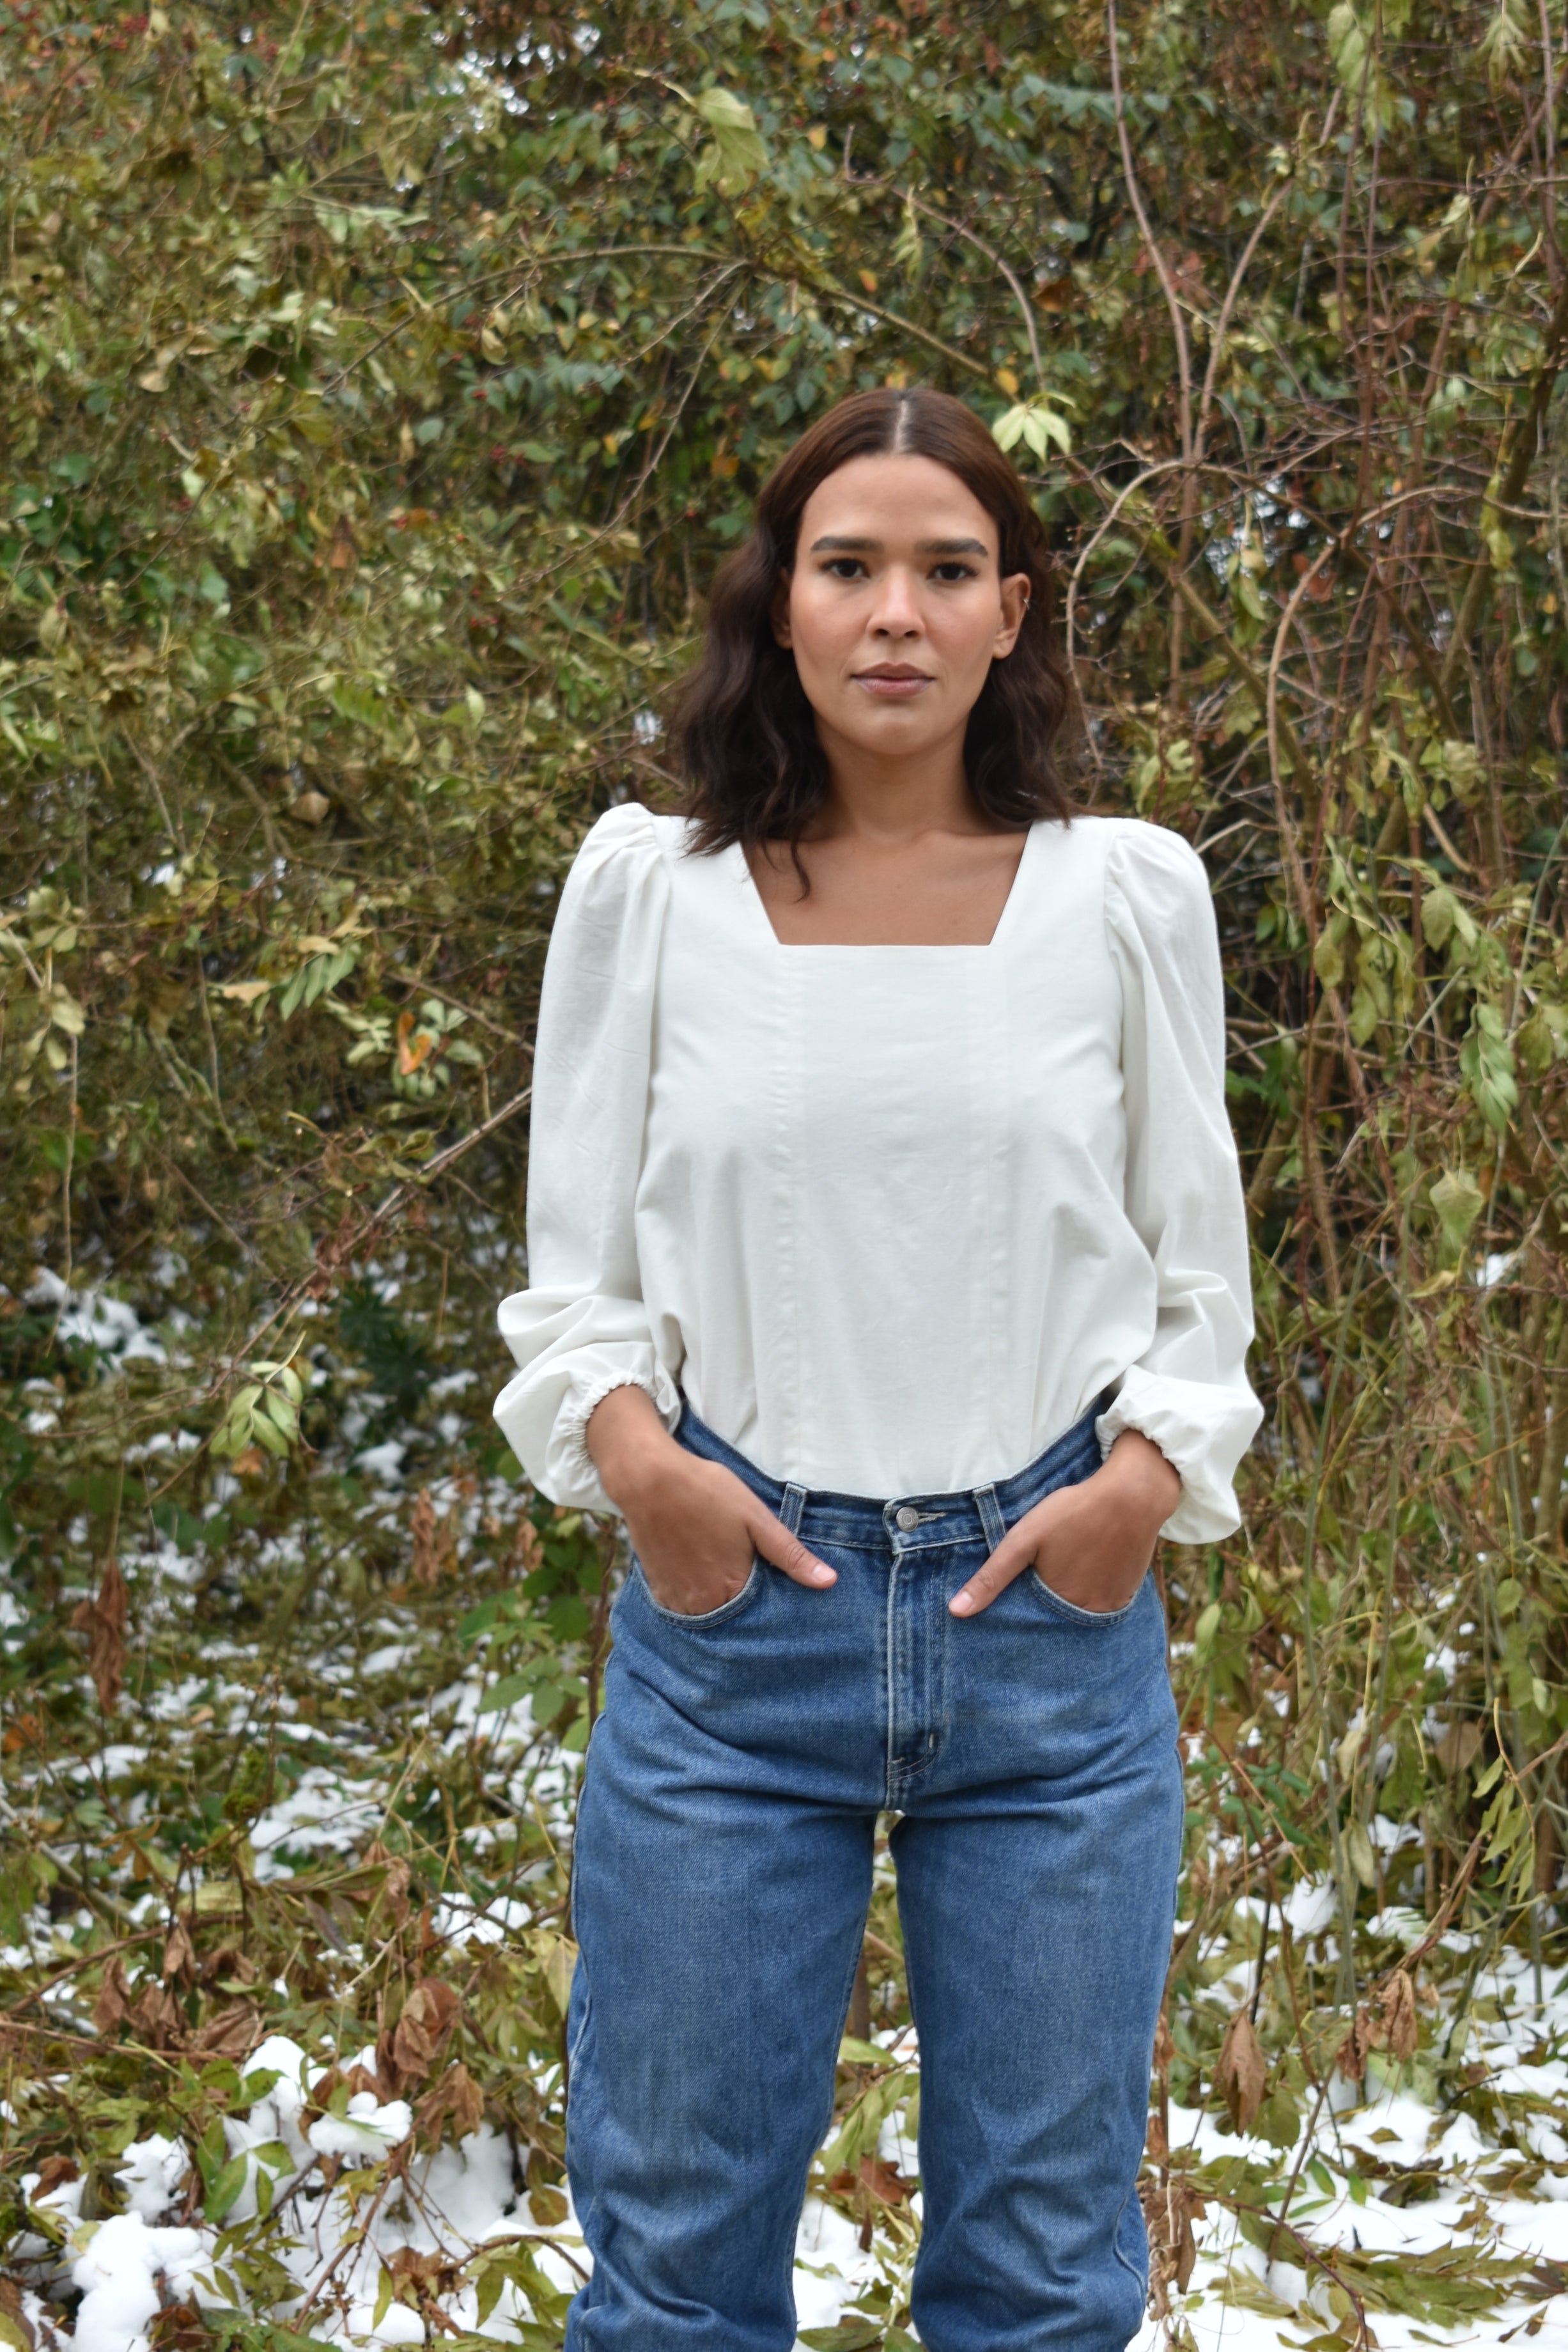 Michelle Blouse in White Organic Cotton